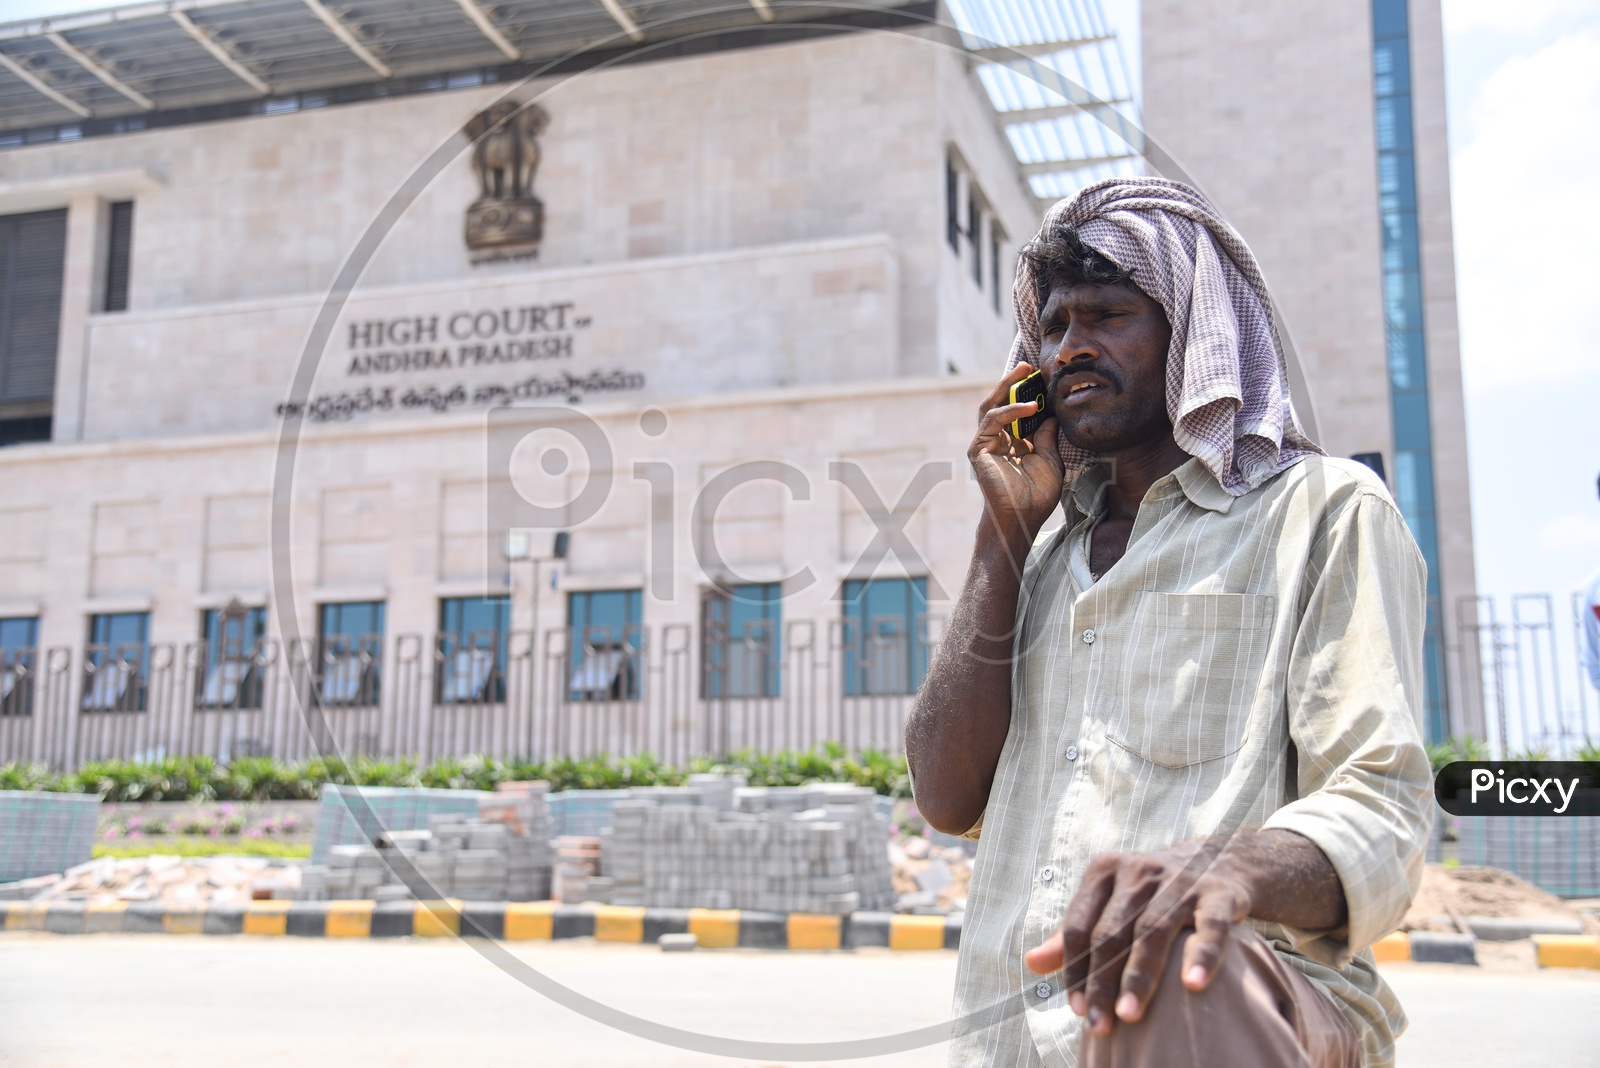 An Rural Village Man Speaking in Mobile Phone at Andhra Pradesh High Court Premise